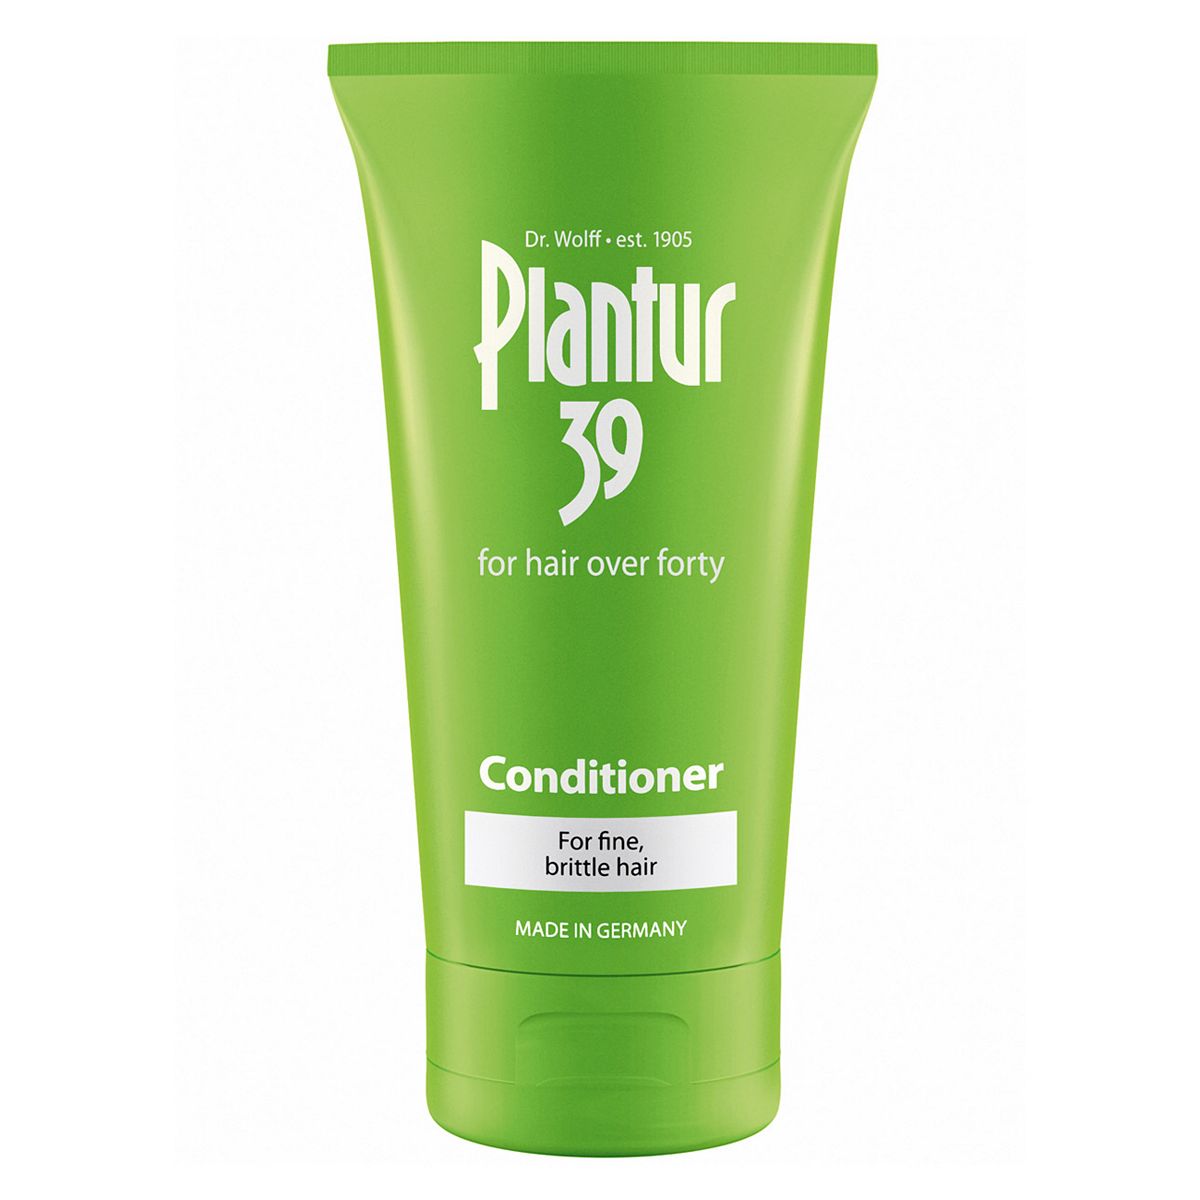 Plantur 39 Conditioner for fine, brittle hair 150ml GOODS Boots   